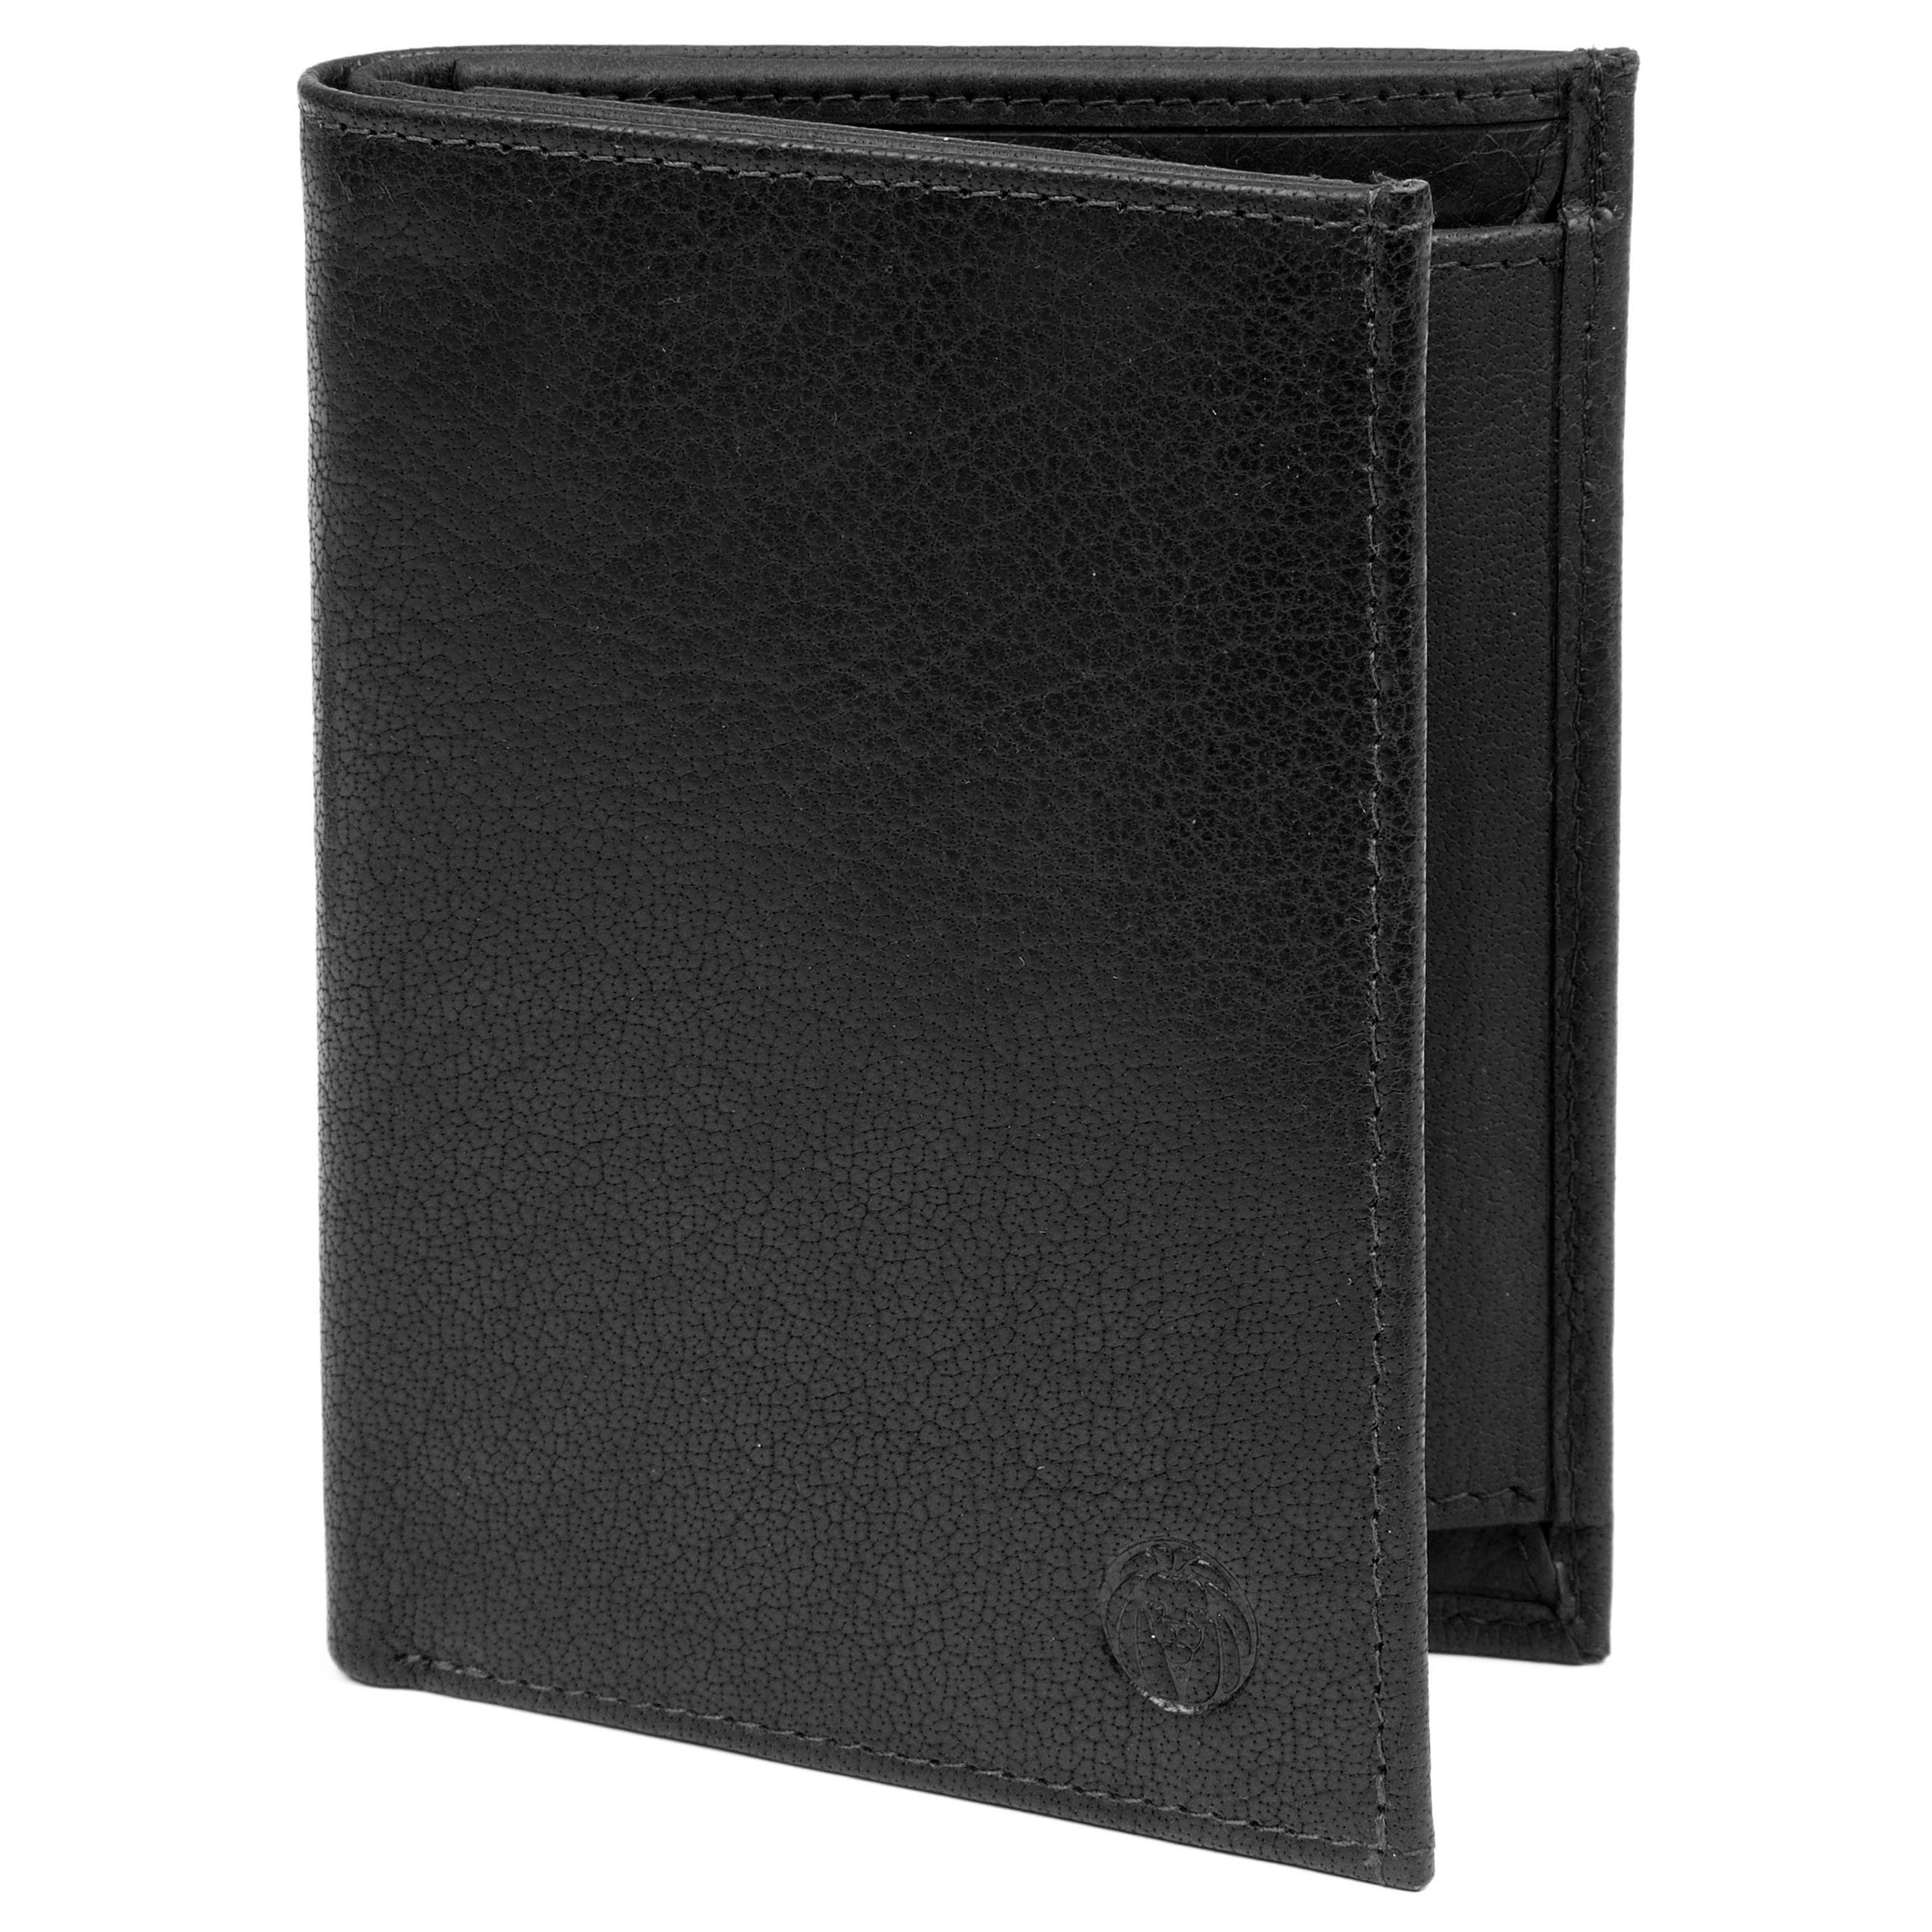 Montreal Original Black RFID Leather Wallet